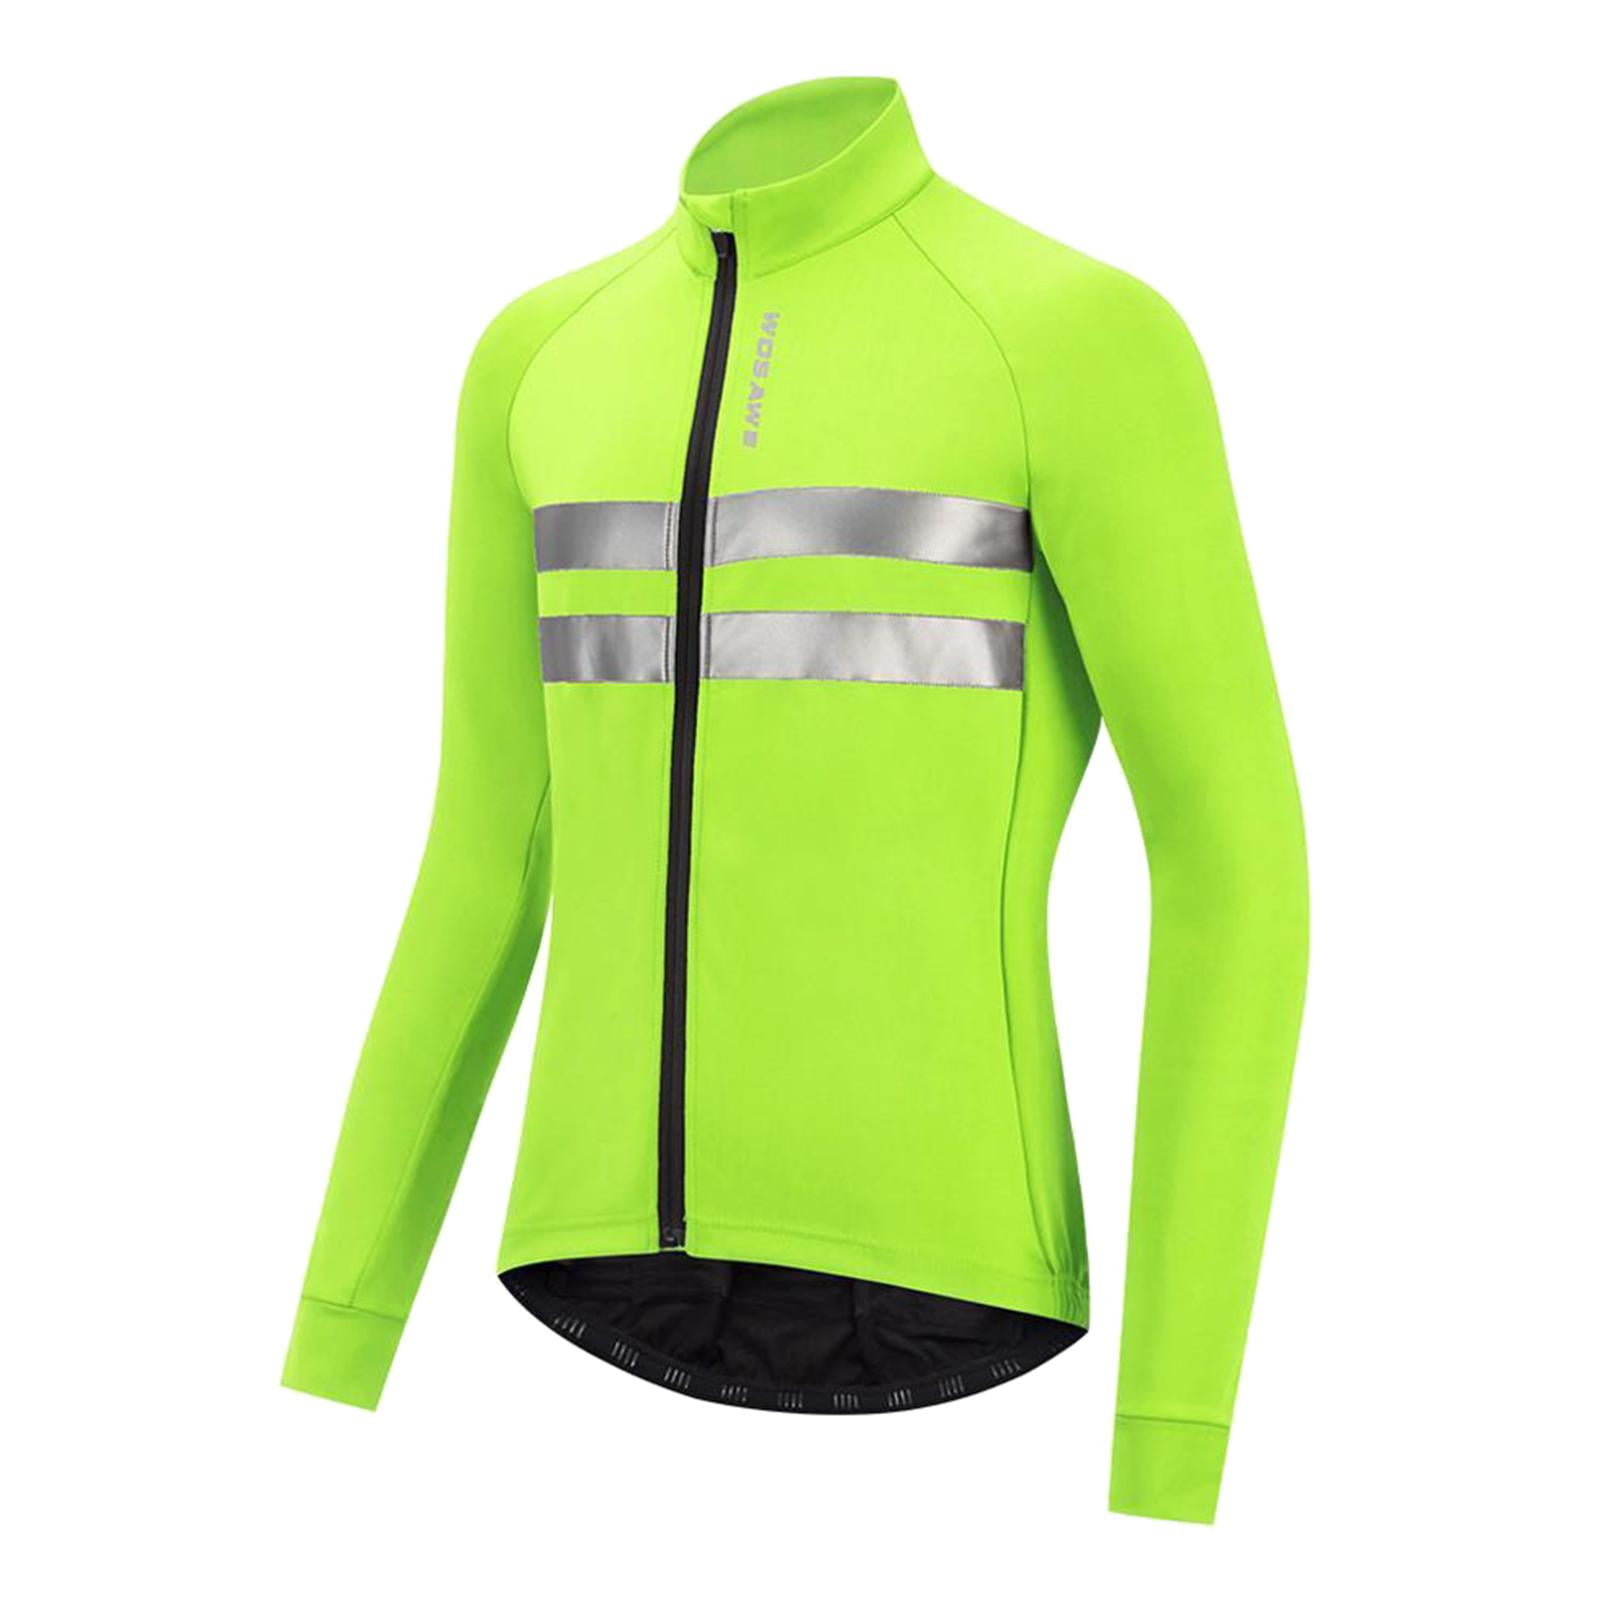 Details about   Cycling Waterproof Jacket Full Sleeve Top Coat Biking Fishing Hiking Windbreaker 